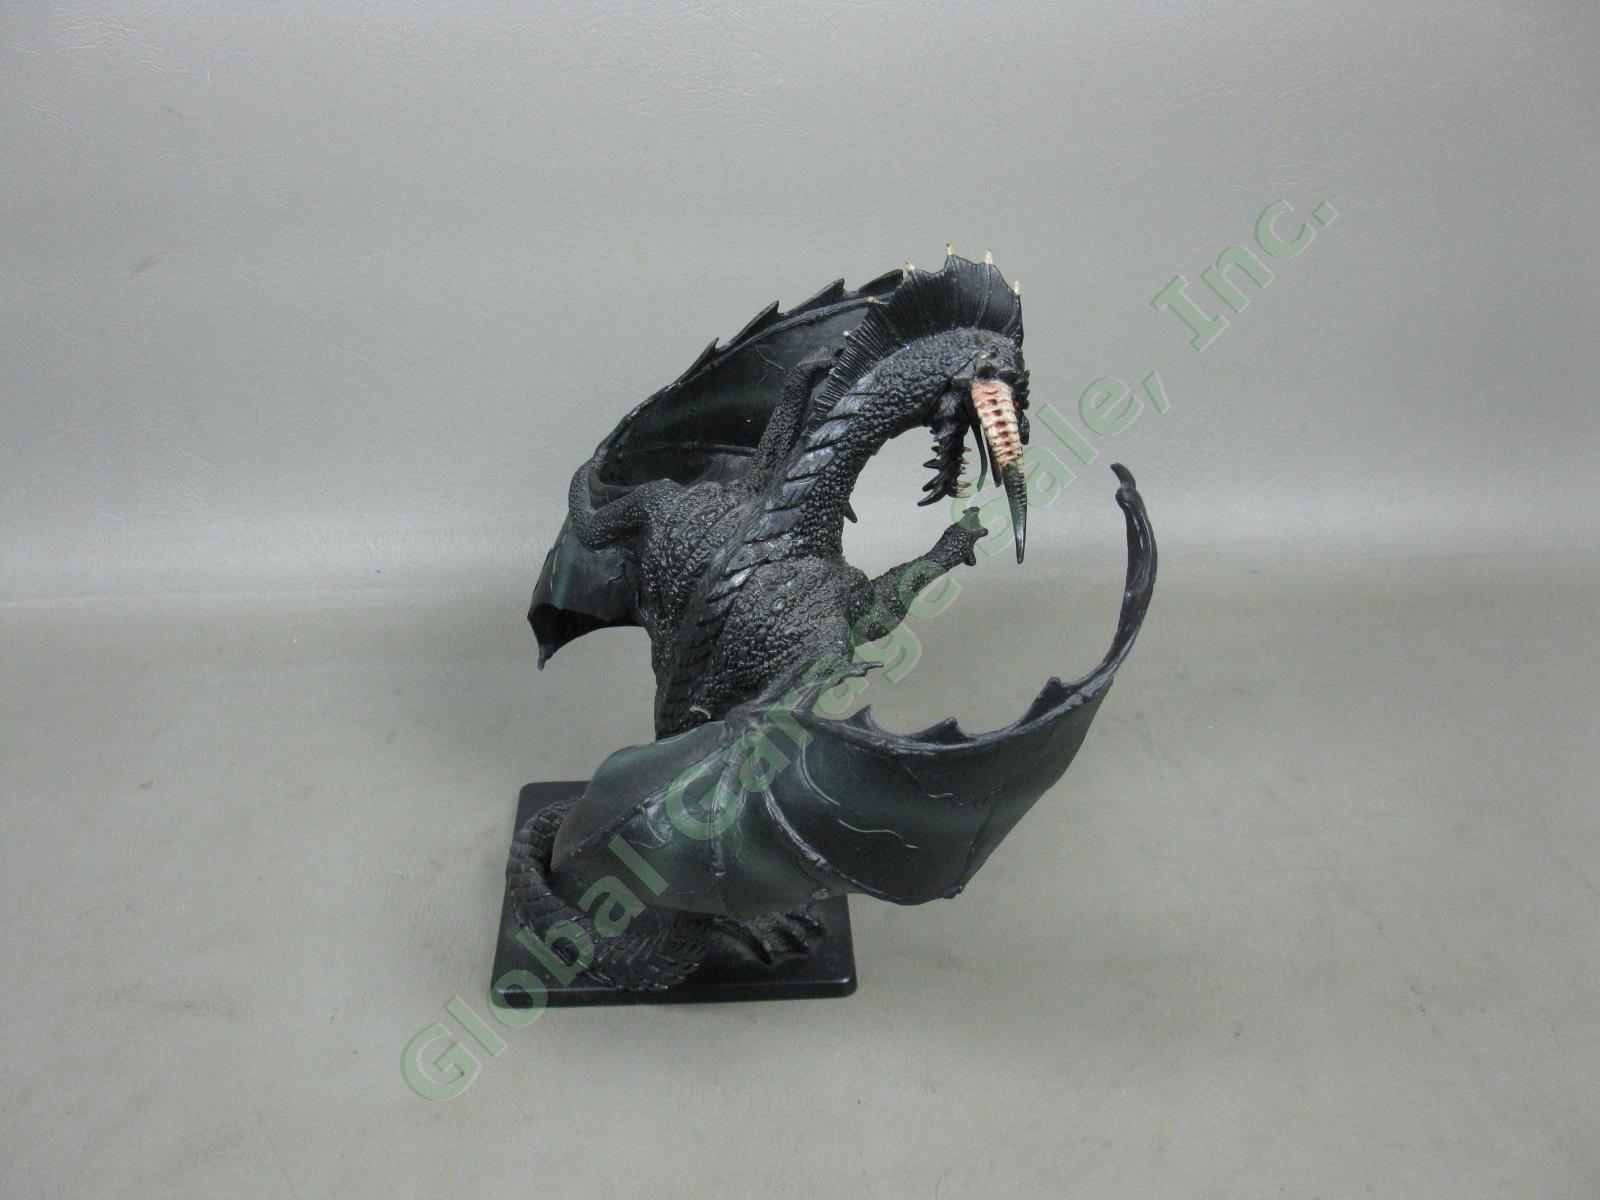 D&D Icons Gargantuan Black Dragon Limited Edition Collector Item Figure Figurine 2